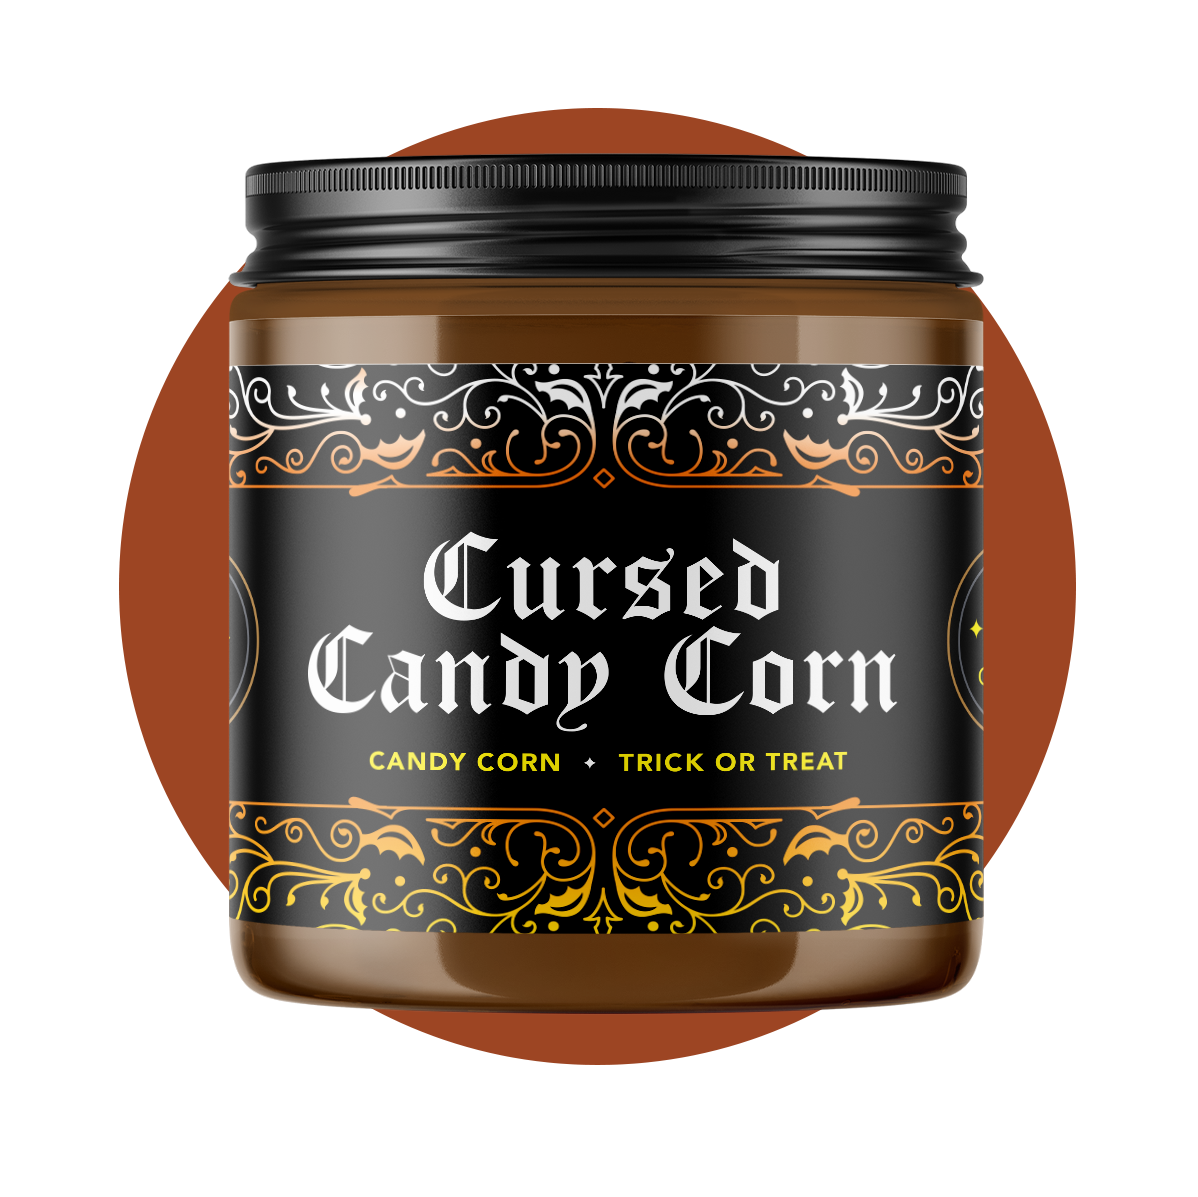 Cursed Candy Corn